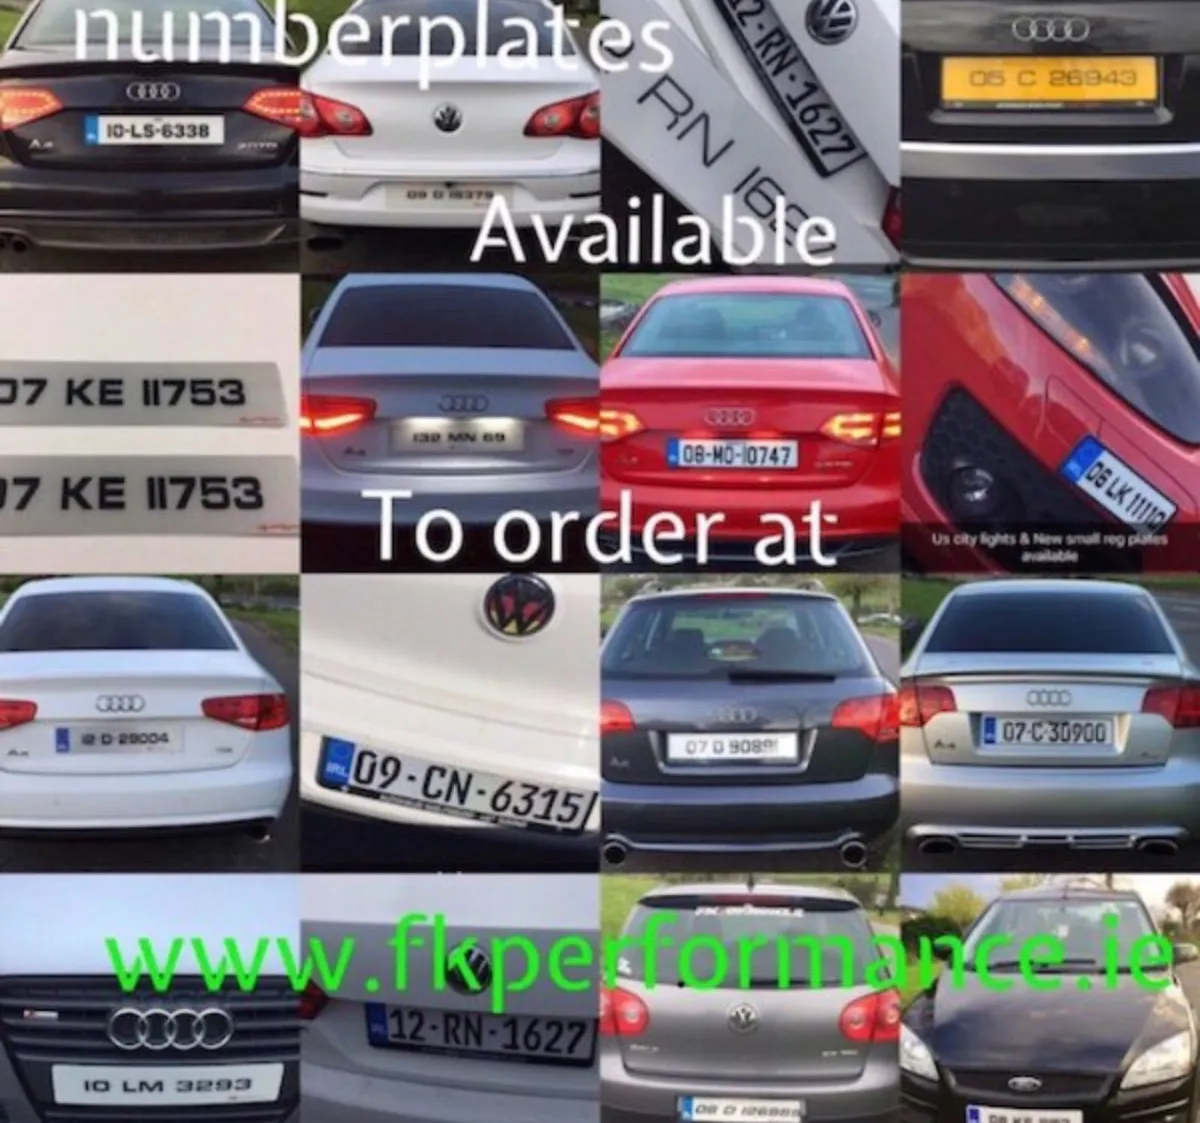 Quality number plates delivered - Image 1